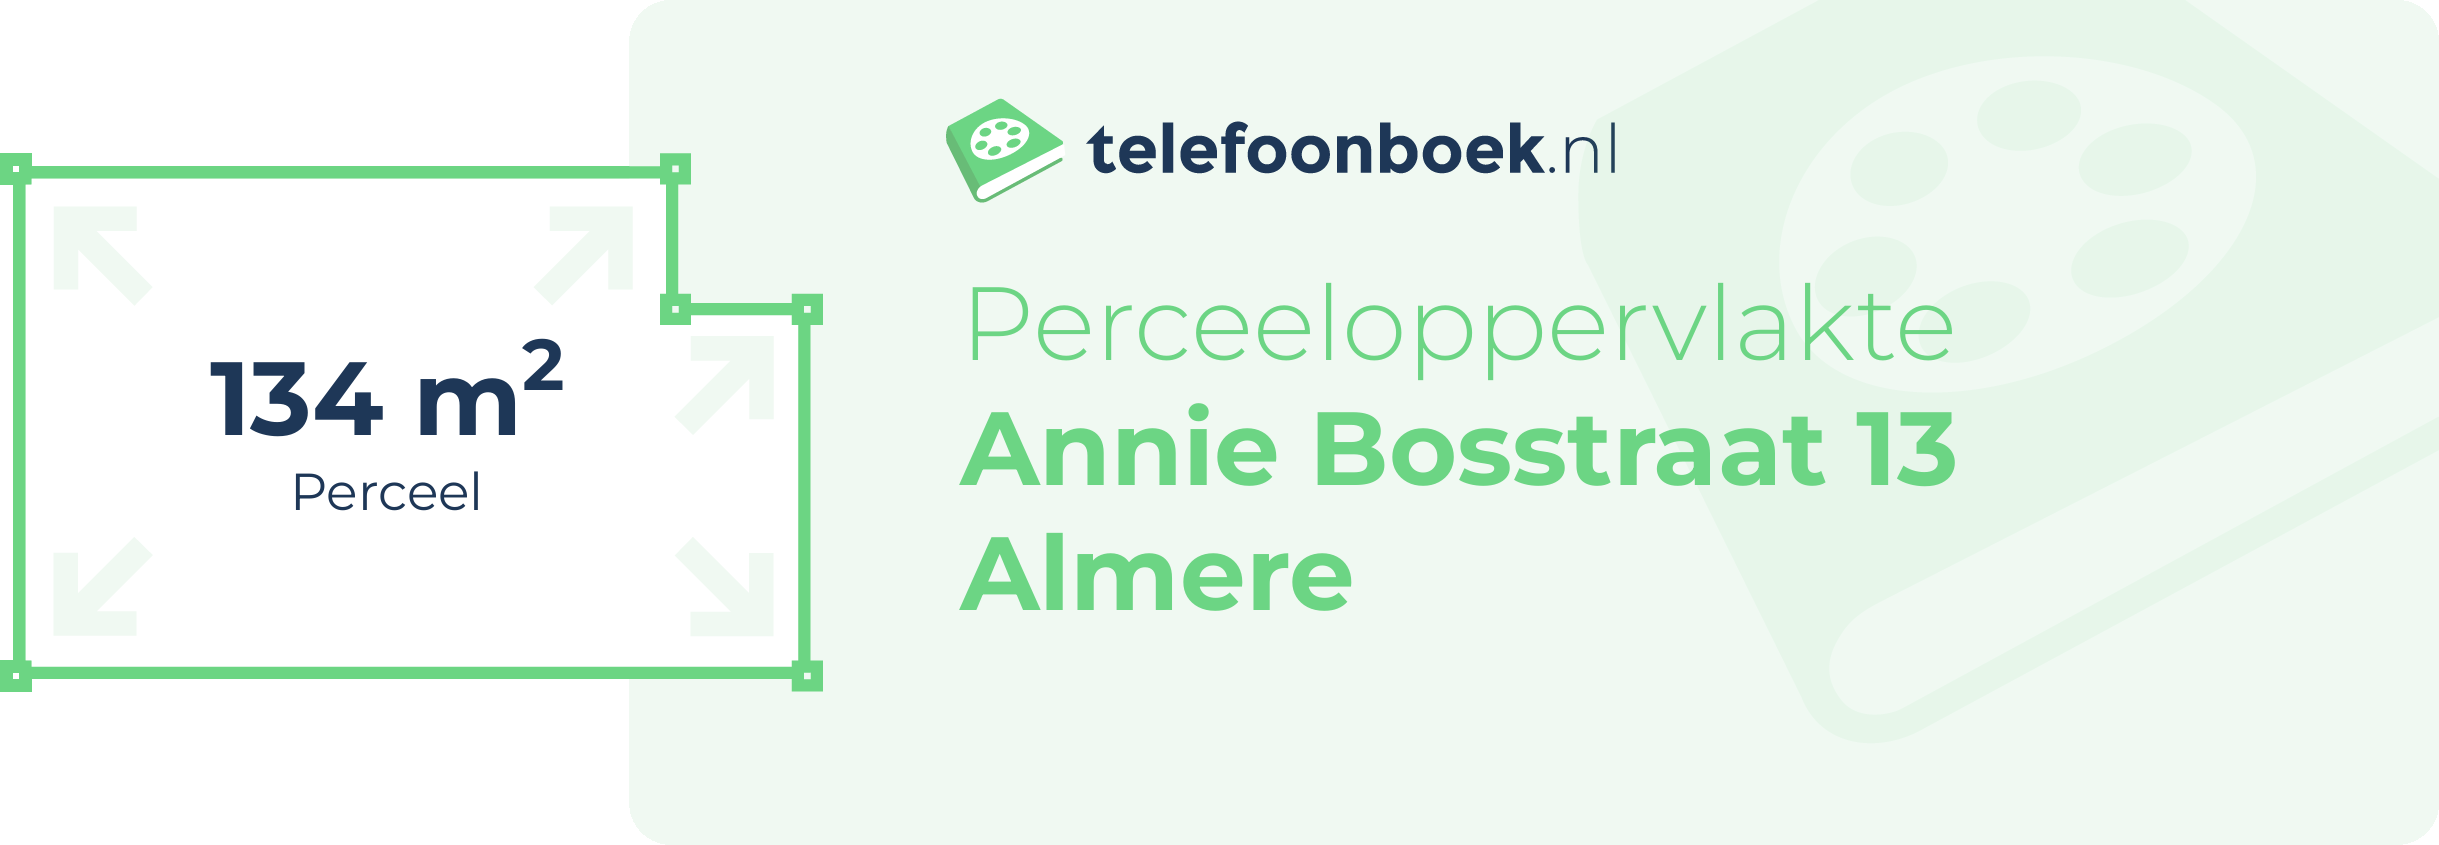 Perceeloppervlakte Annie Bosstraat 13 Almere